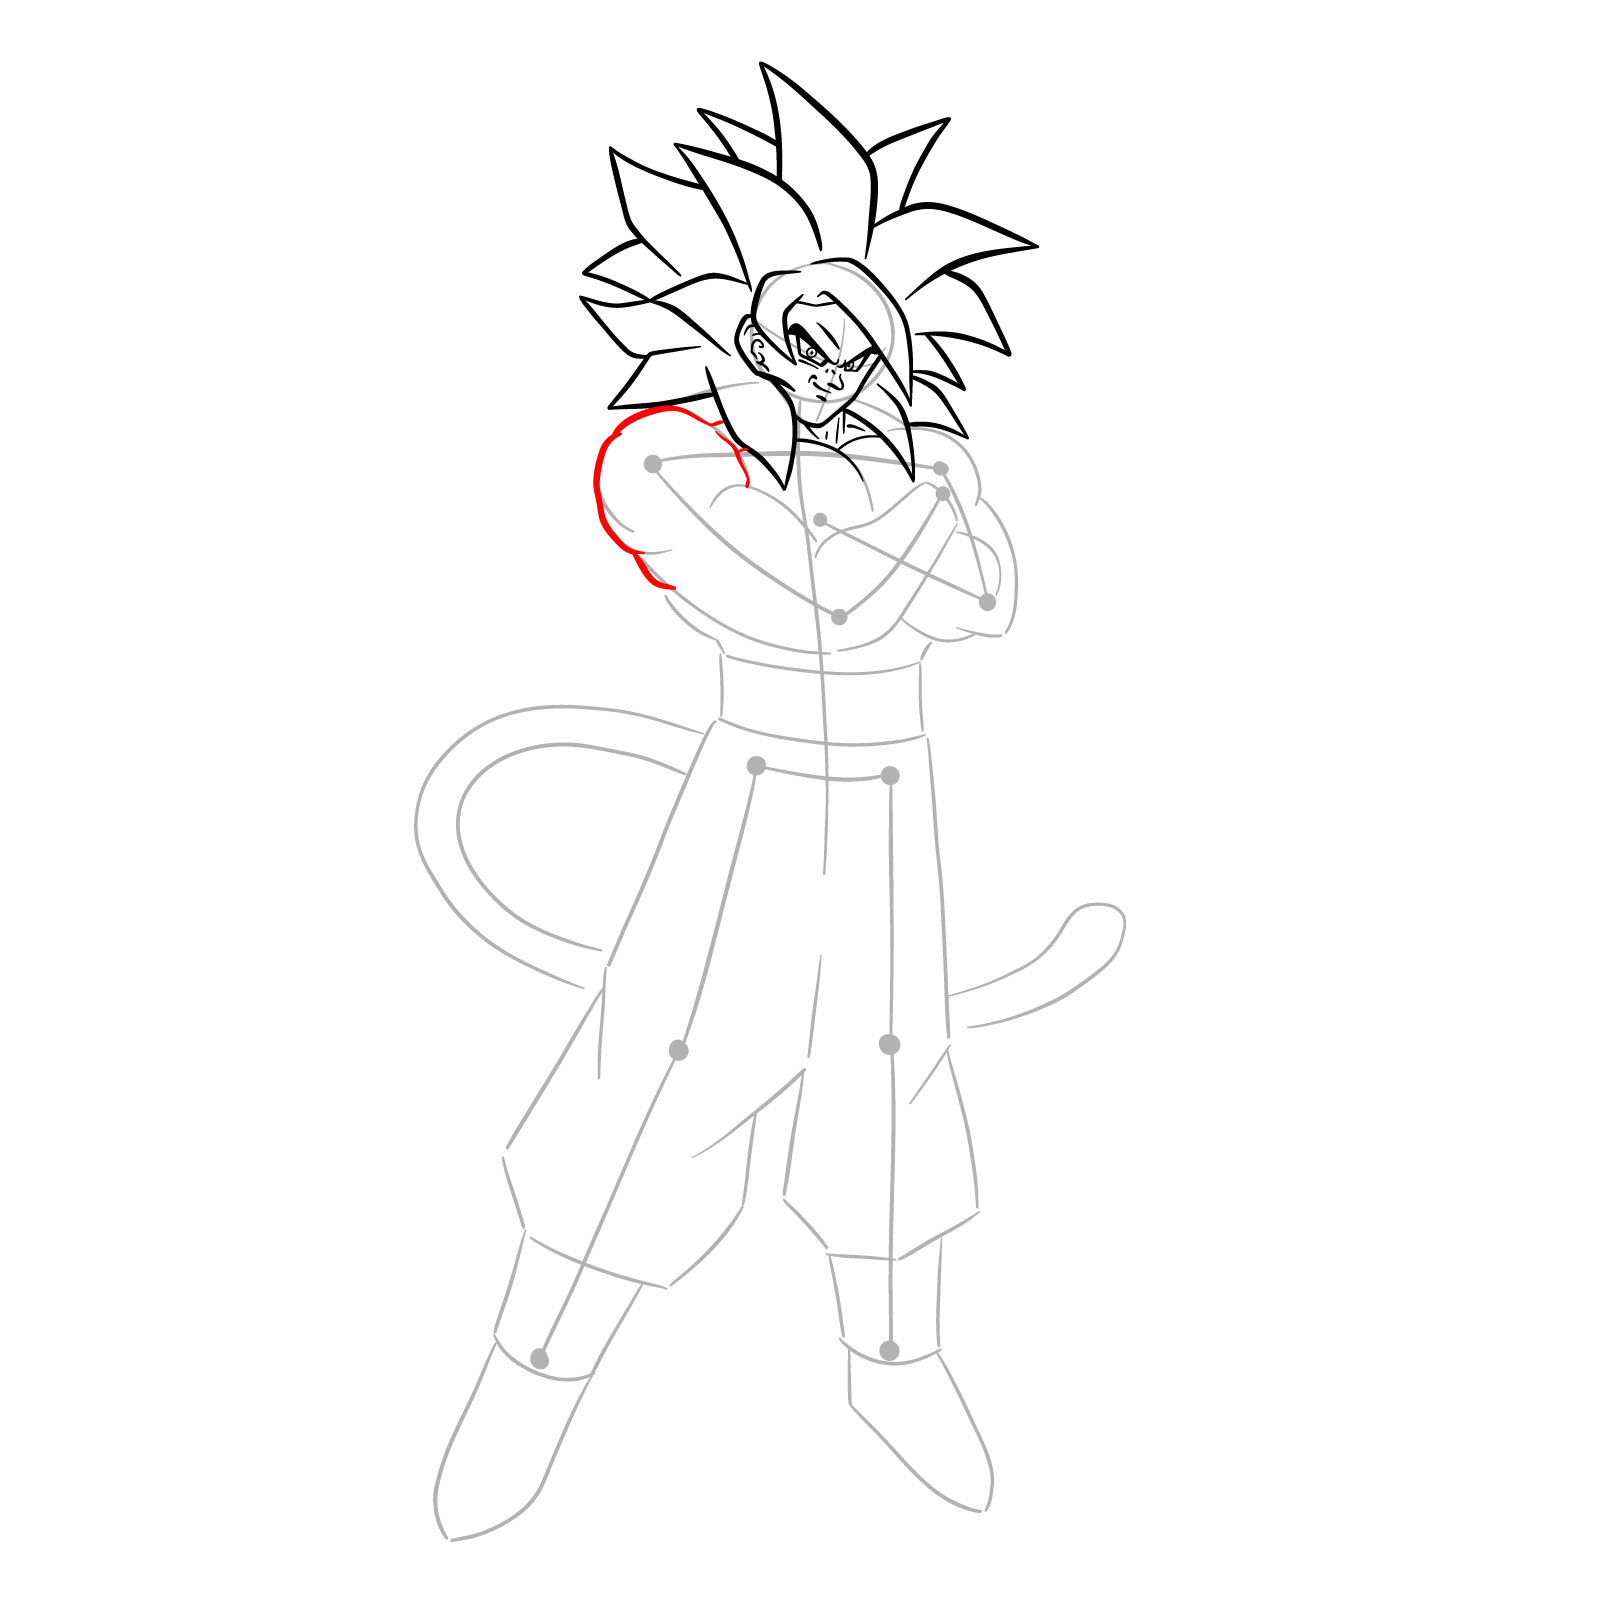 How to tát draw Goku Super Saiyan 4 - step 15